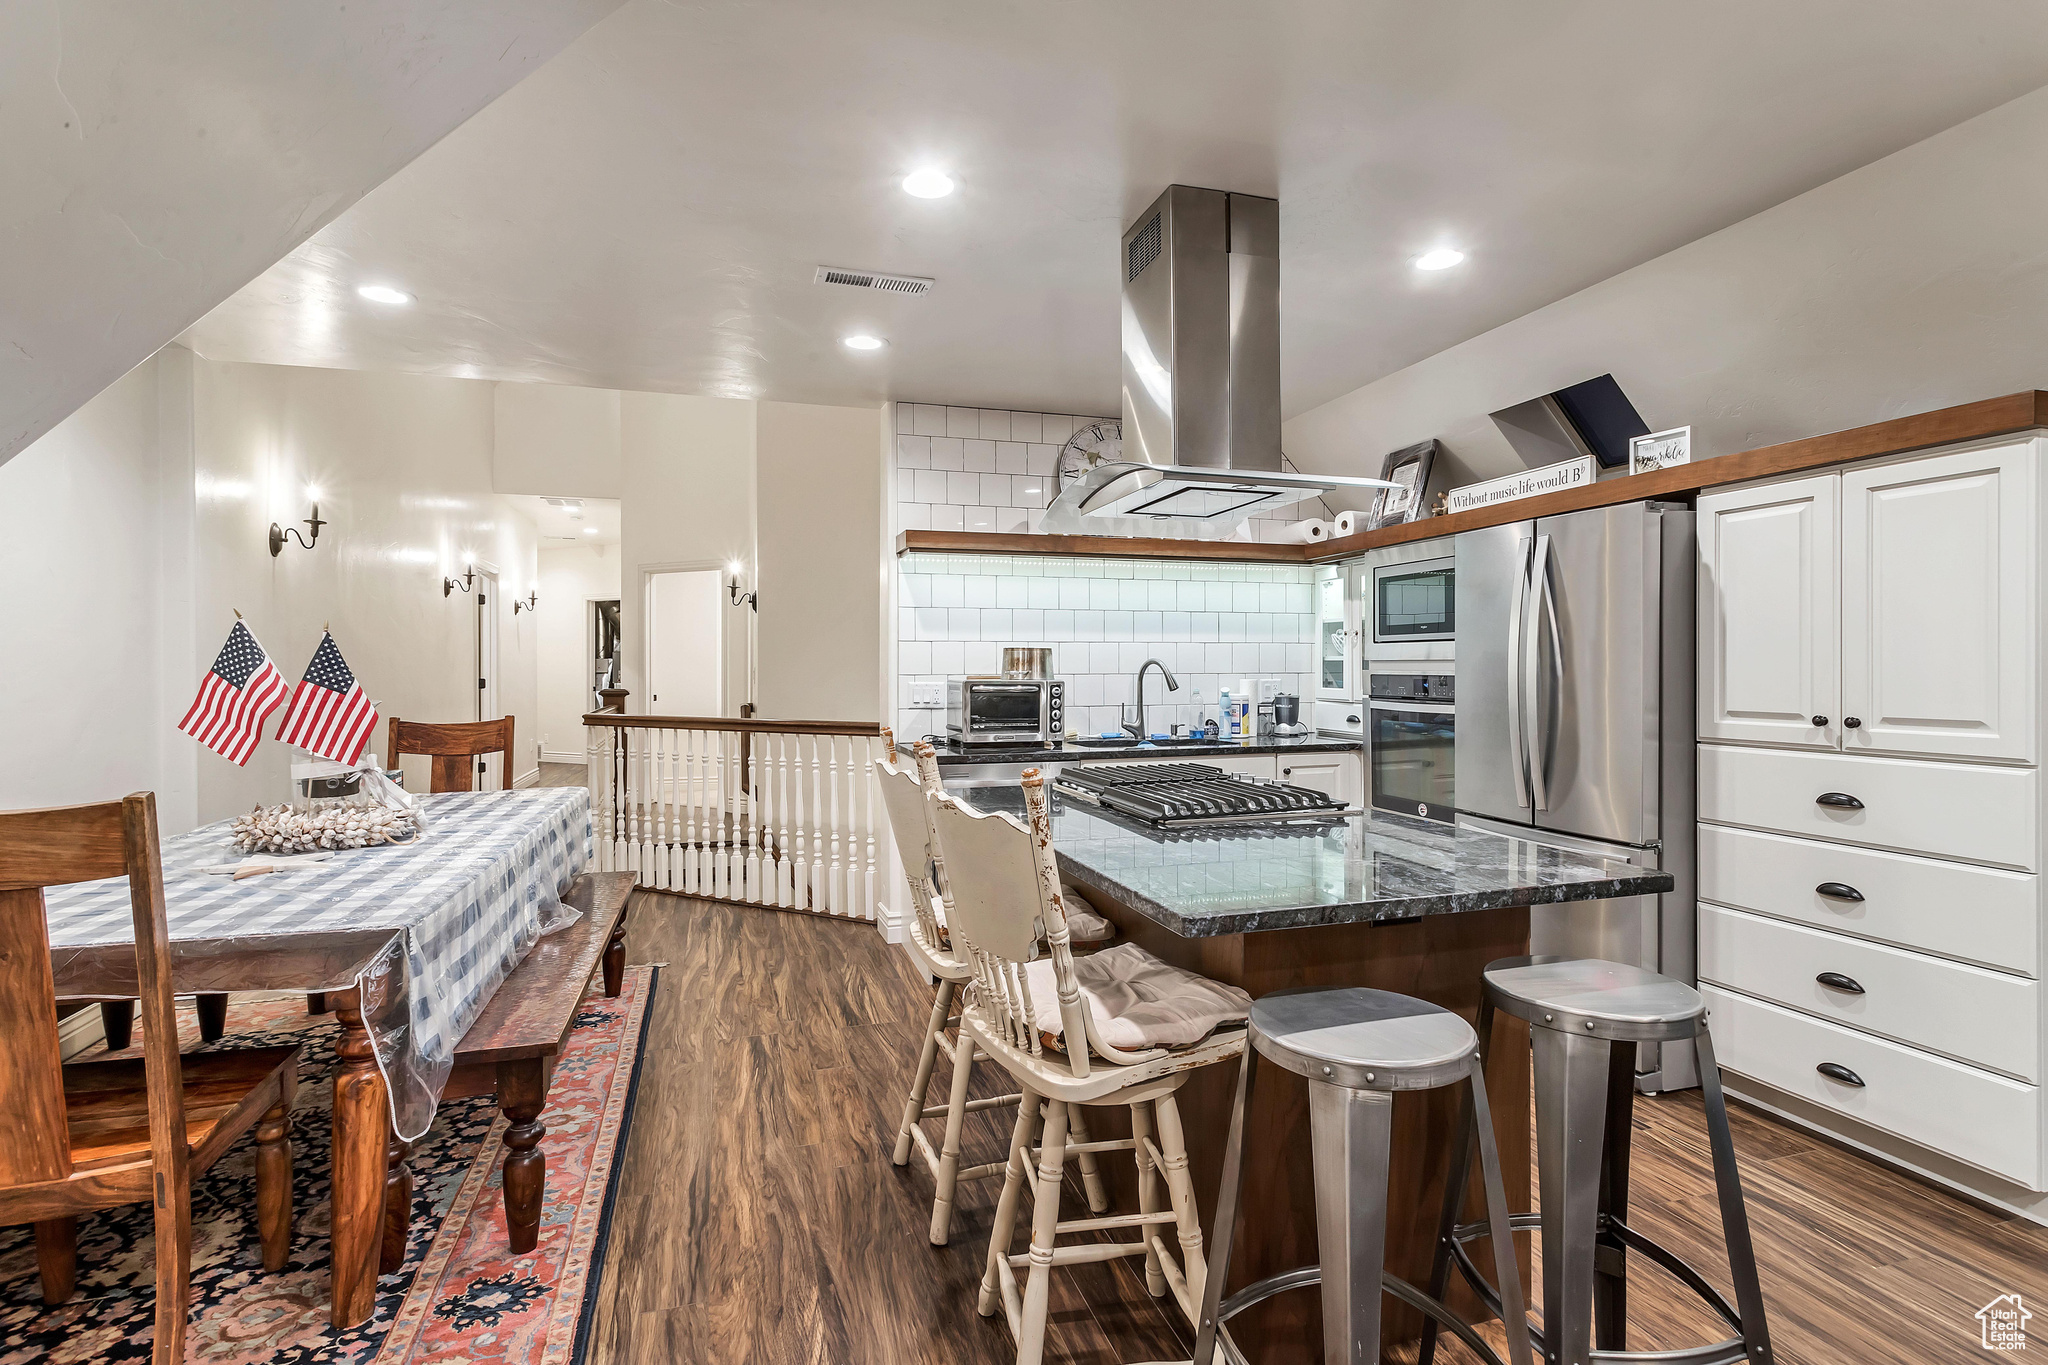 Kitchen featuring island range hood, backsplash, sink, dark hardwood / wood floors, and appliances with stainless steel finishes